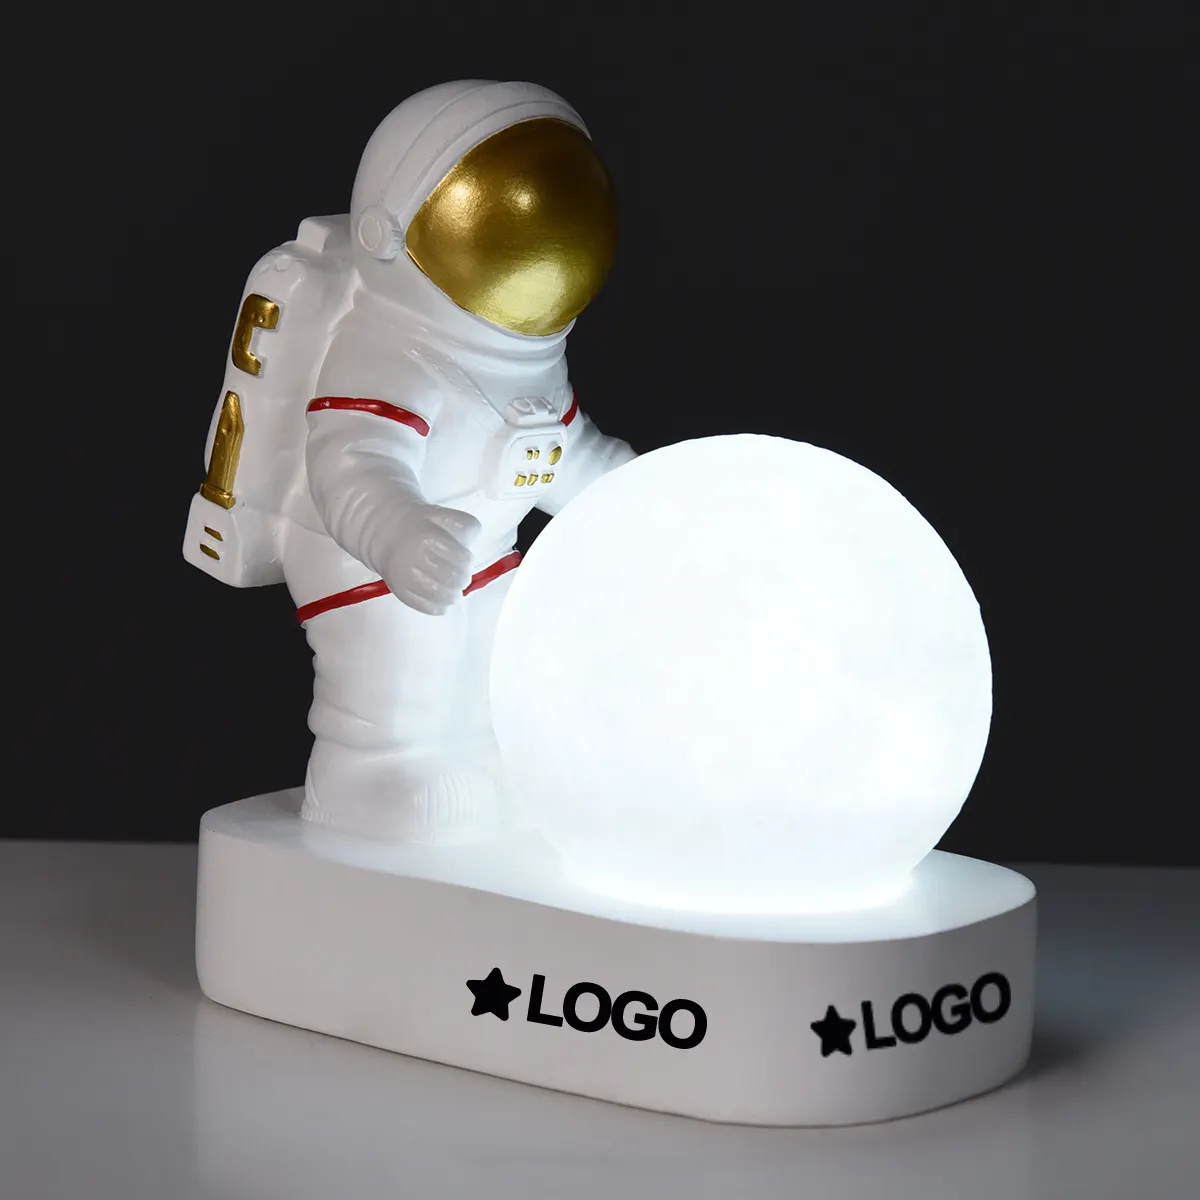 LED light bedroom decor resin astronaut figurine kids room resin astronaut night light decor